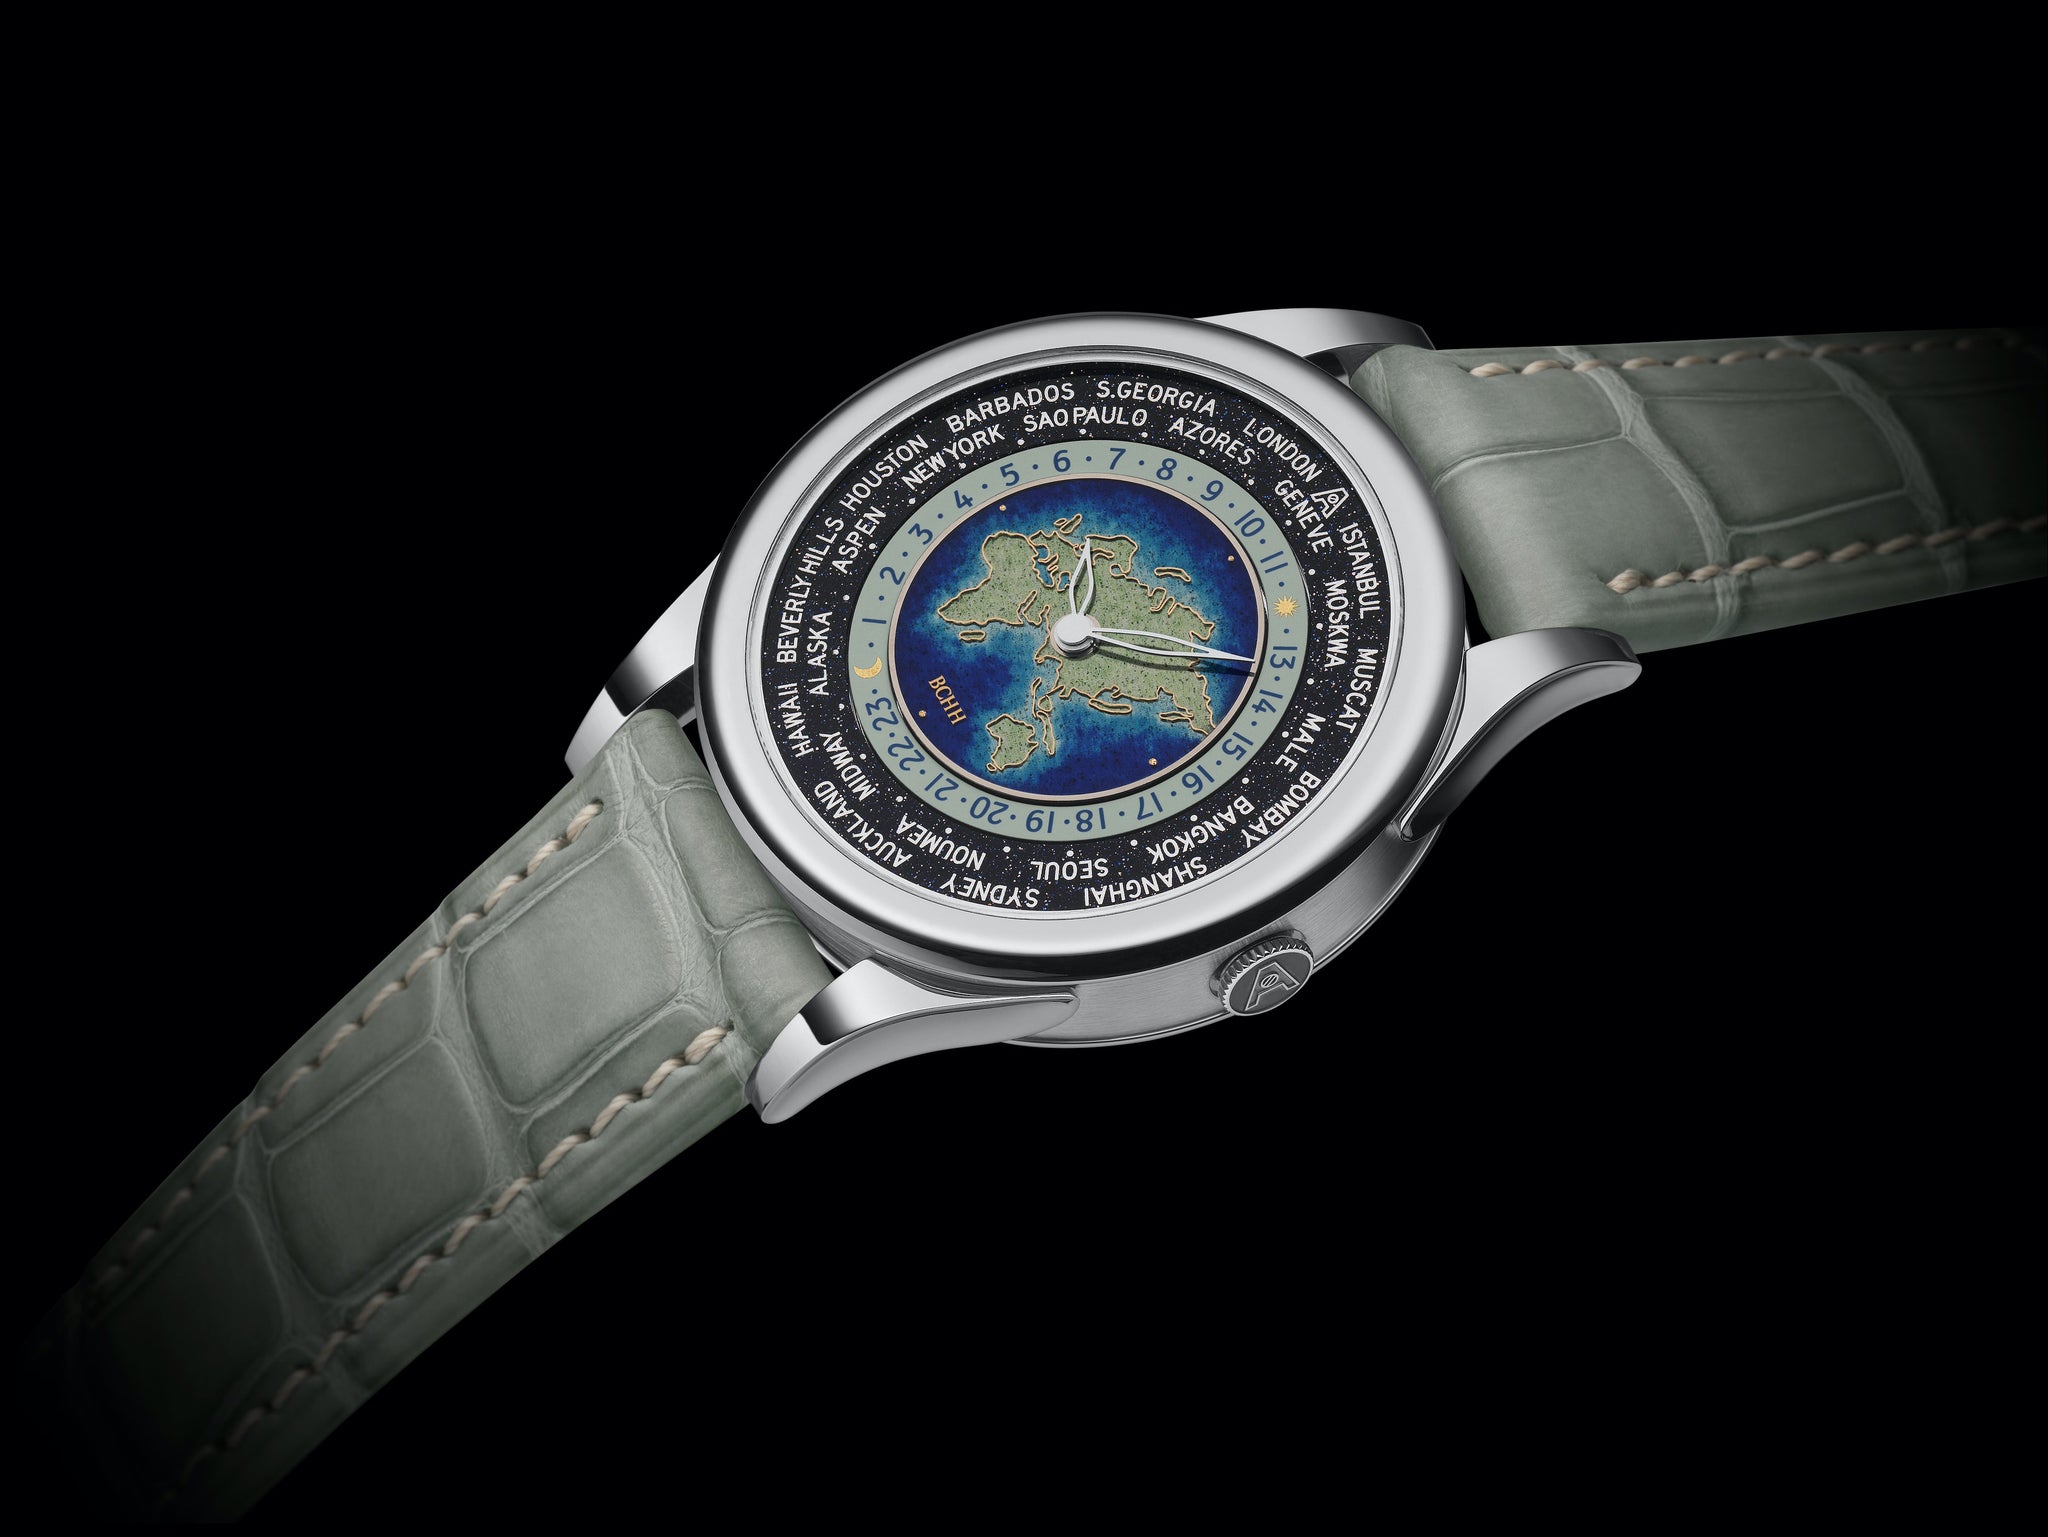 Celestial Voyager "Eurasia"